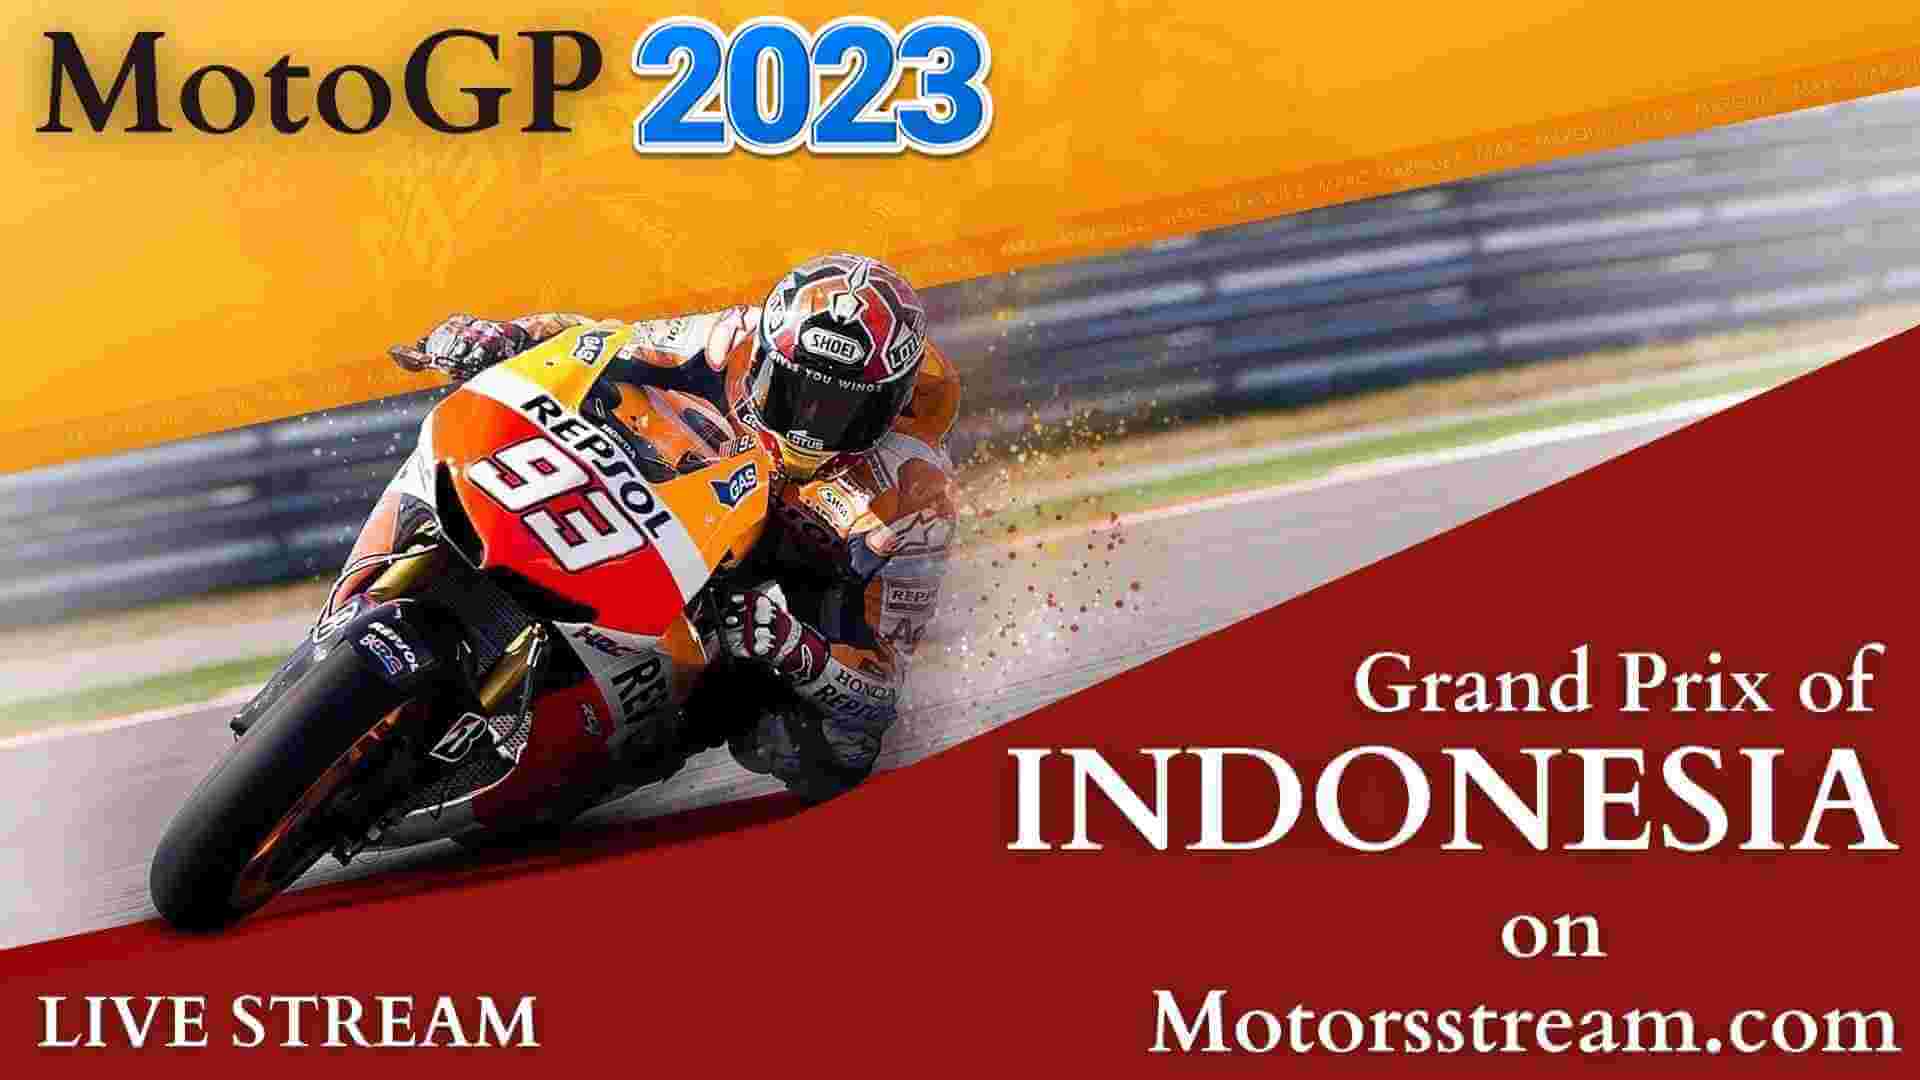 Indonesia Grand Prix Live Stream MotoGP